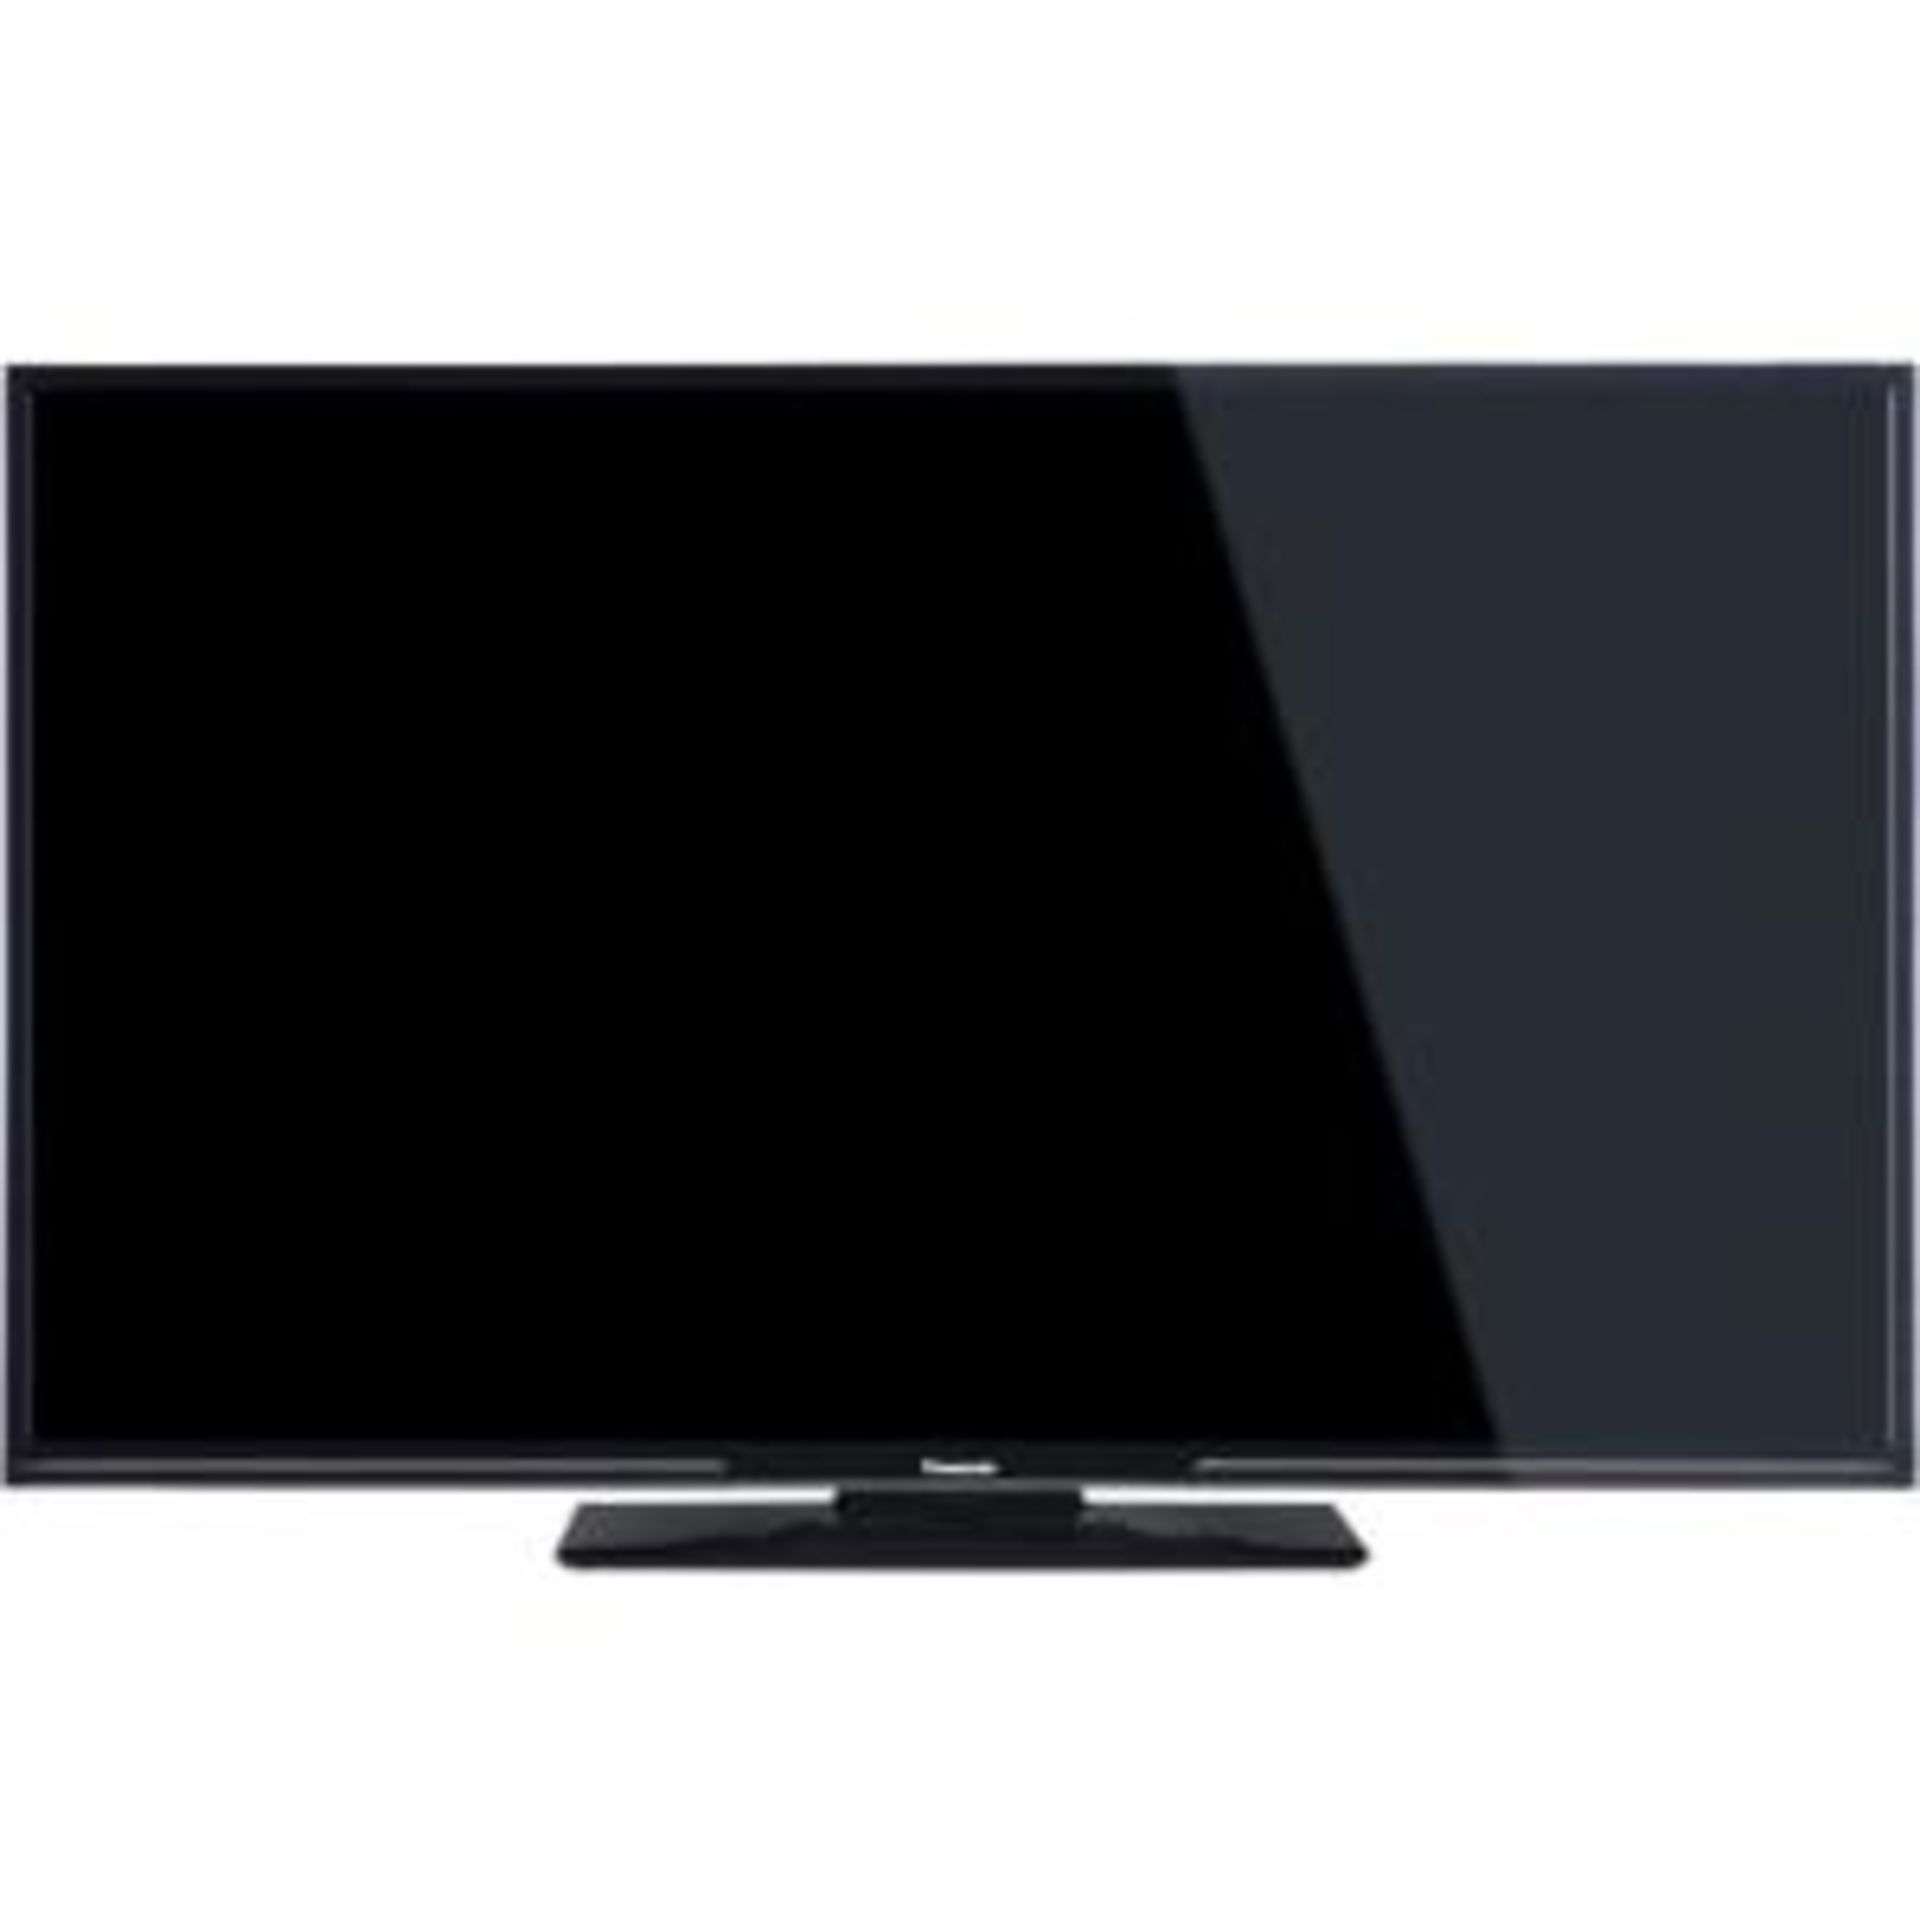 (T36) PANASONIC VIERA TX-55DX650B Smart 4k Ultra HD 55" LED TV. RRP £799. Experience beautiful 4k - Image 2 of 2